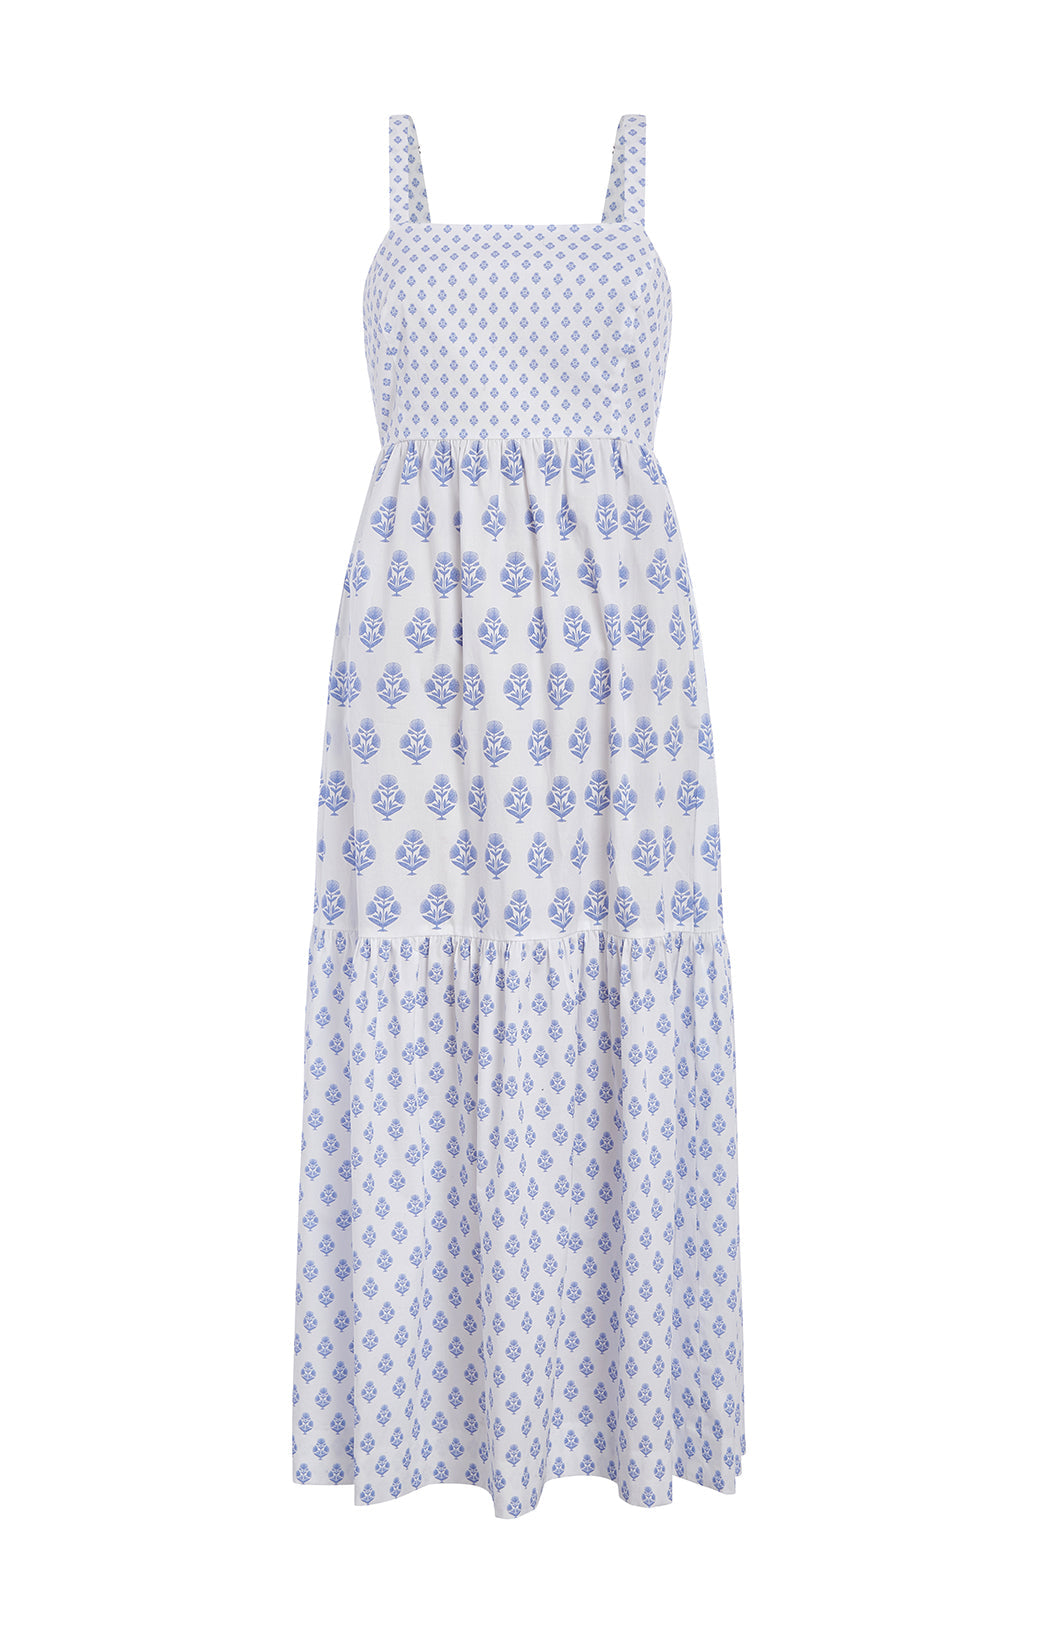 Caravan - Linen-Blend Knit Godet Tank Dress - Product Image